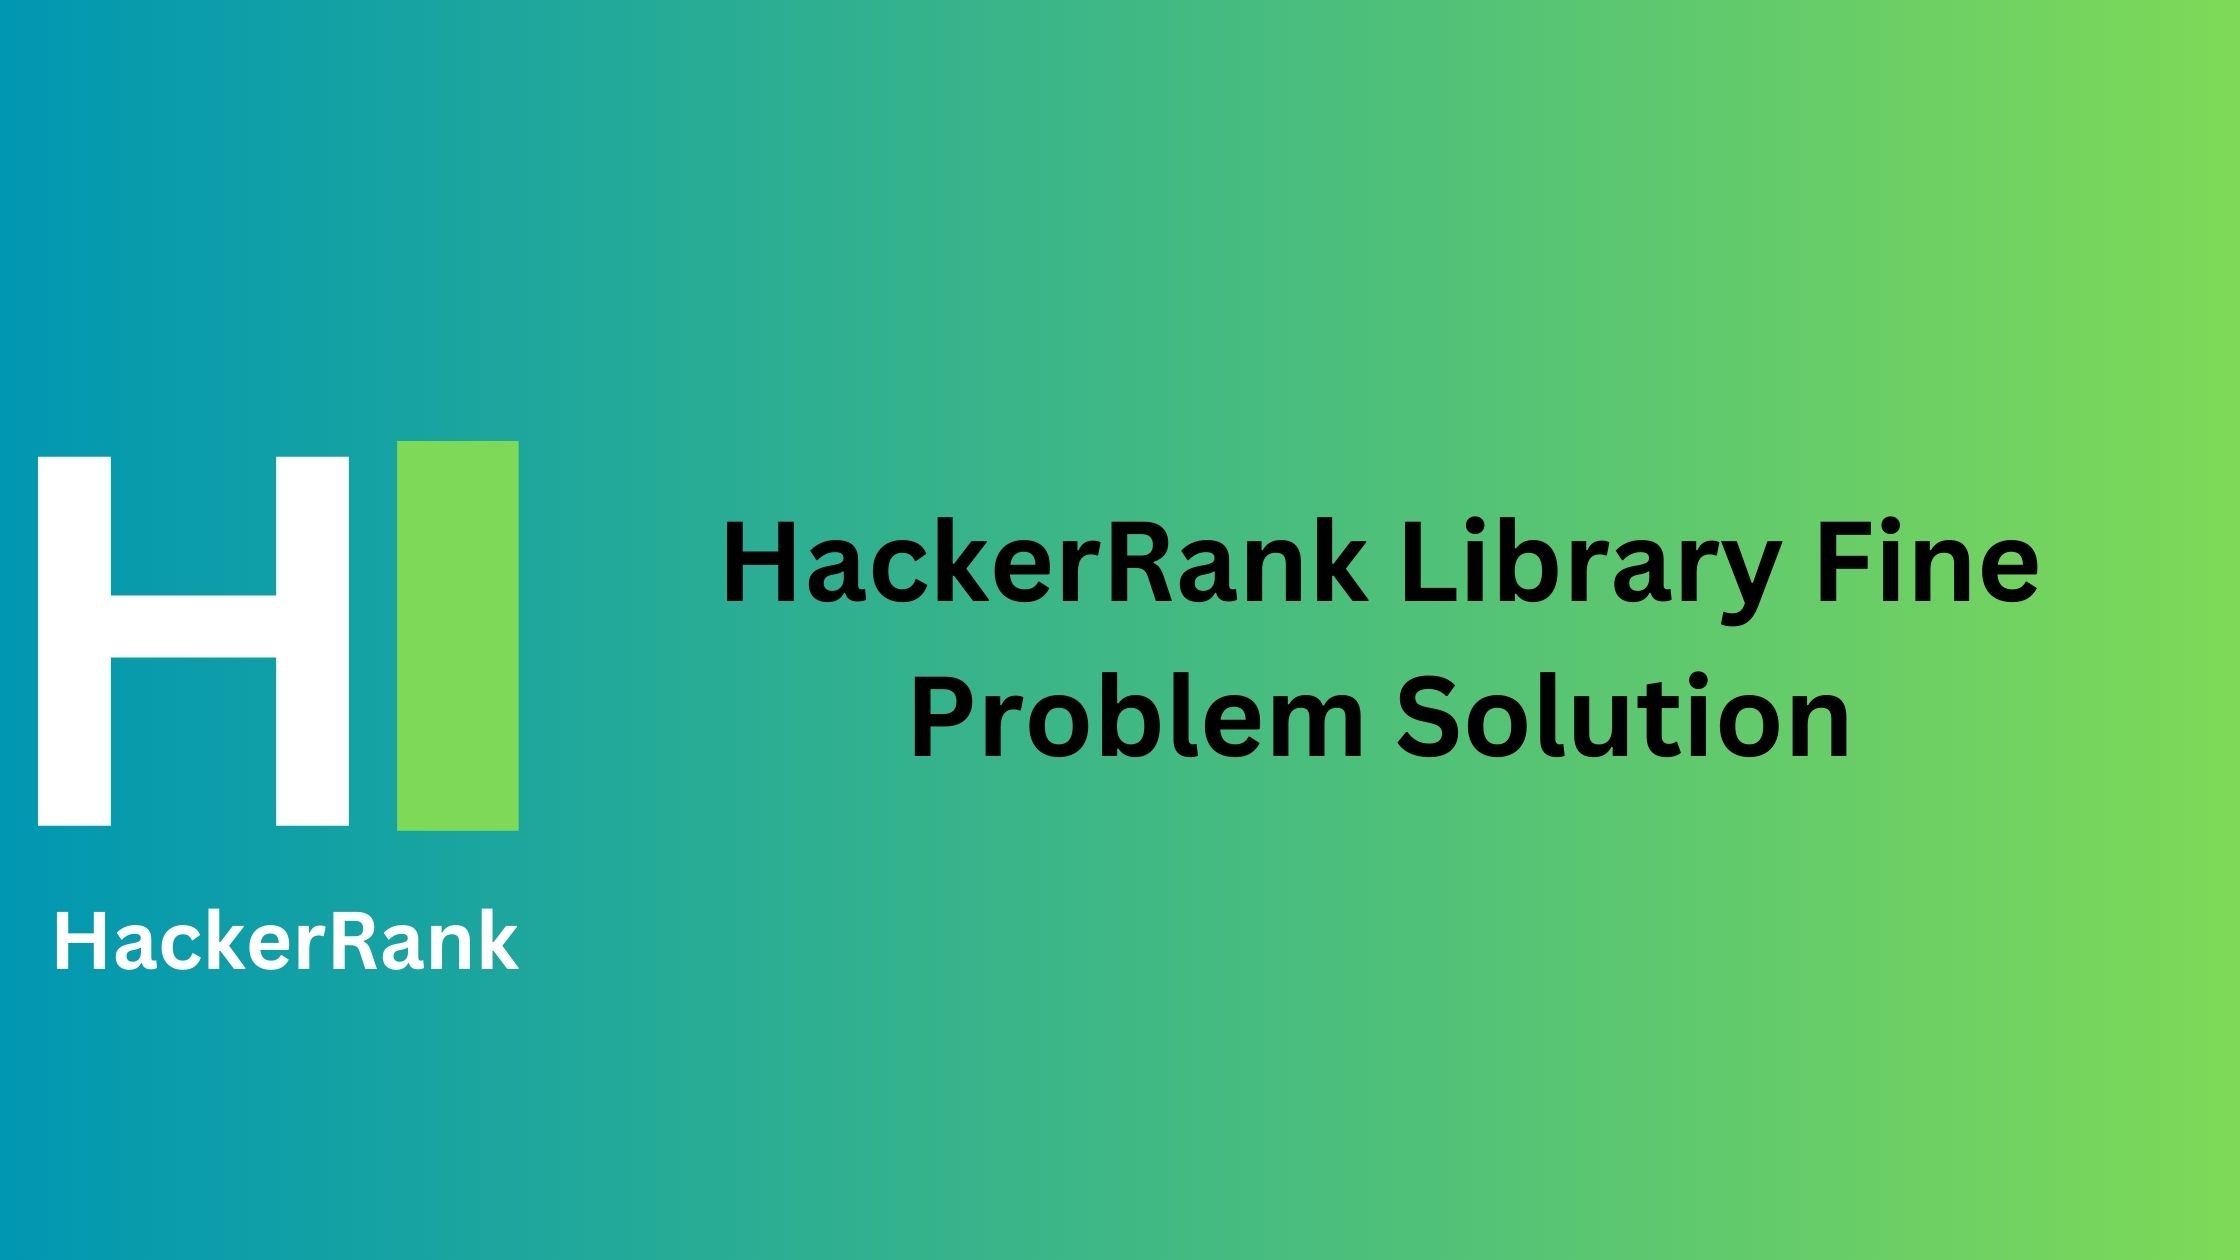 HackerRank Library Fine Problem Solution